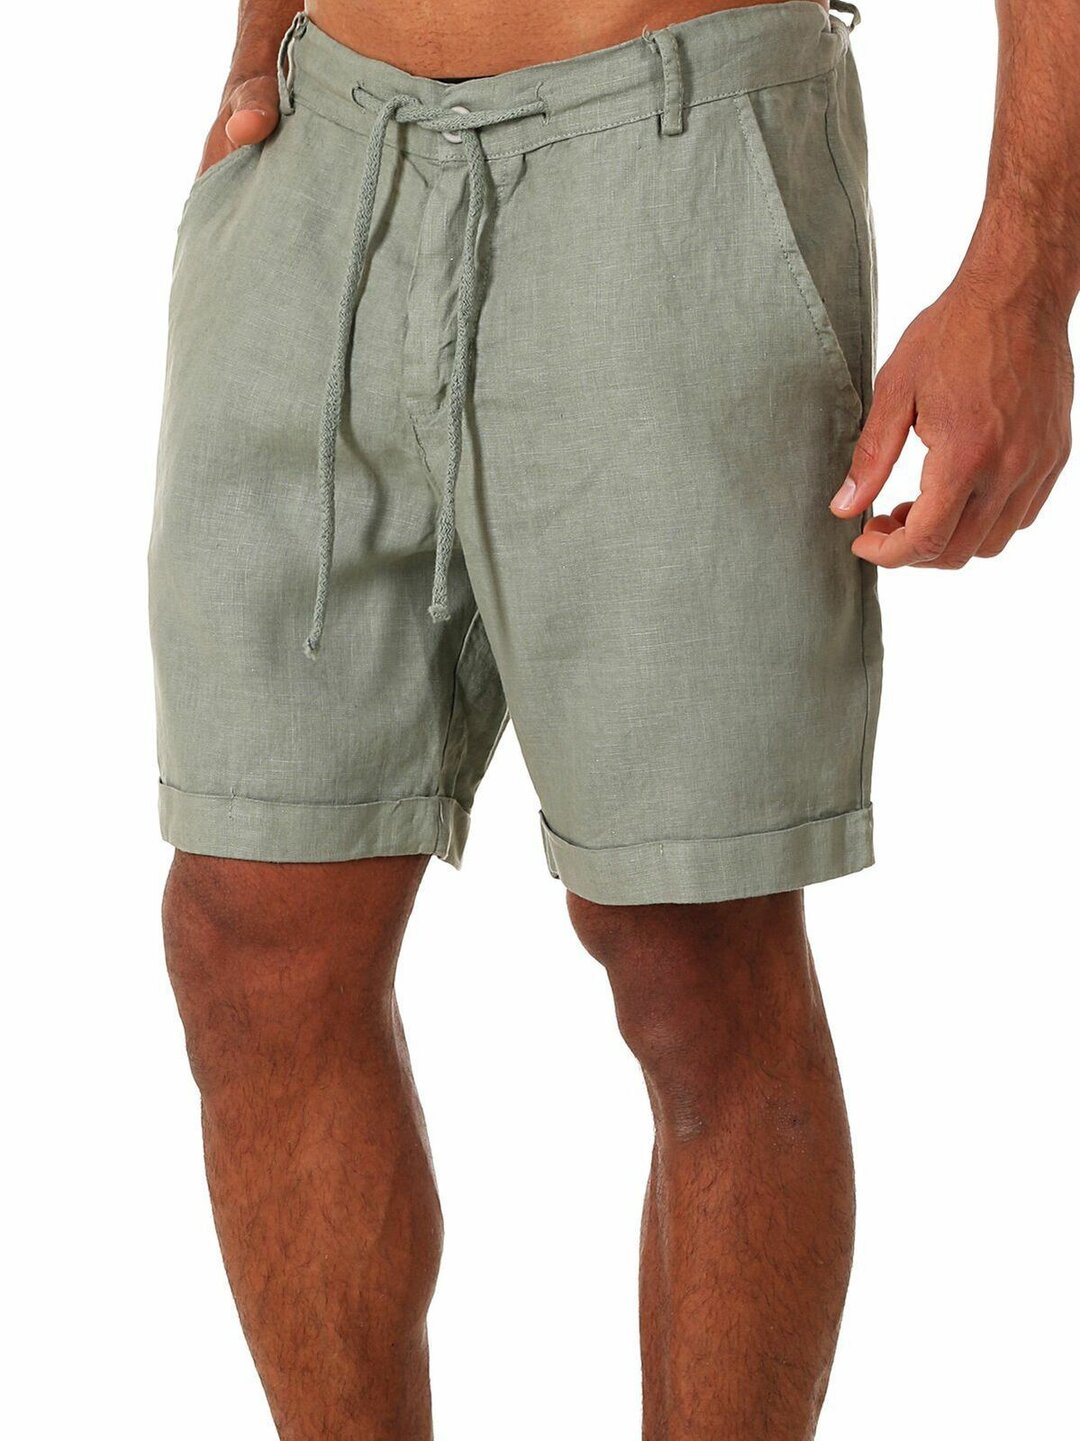 Men's solid color lace-up sports casual pants short